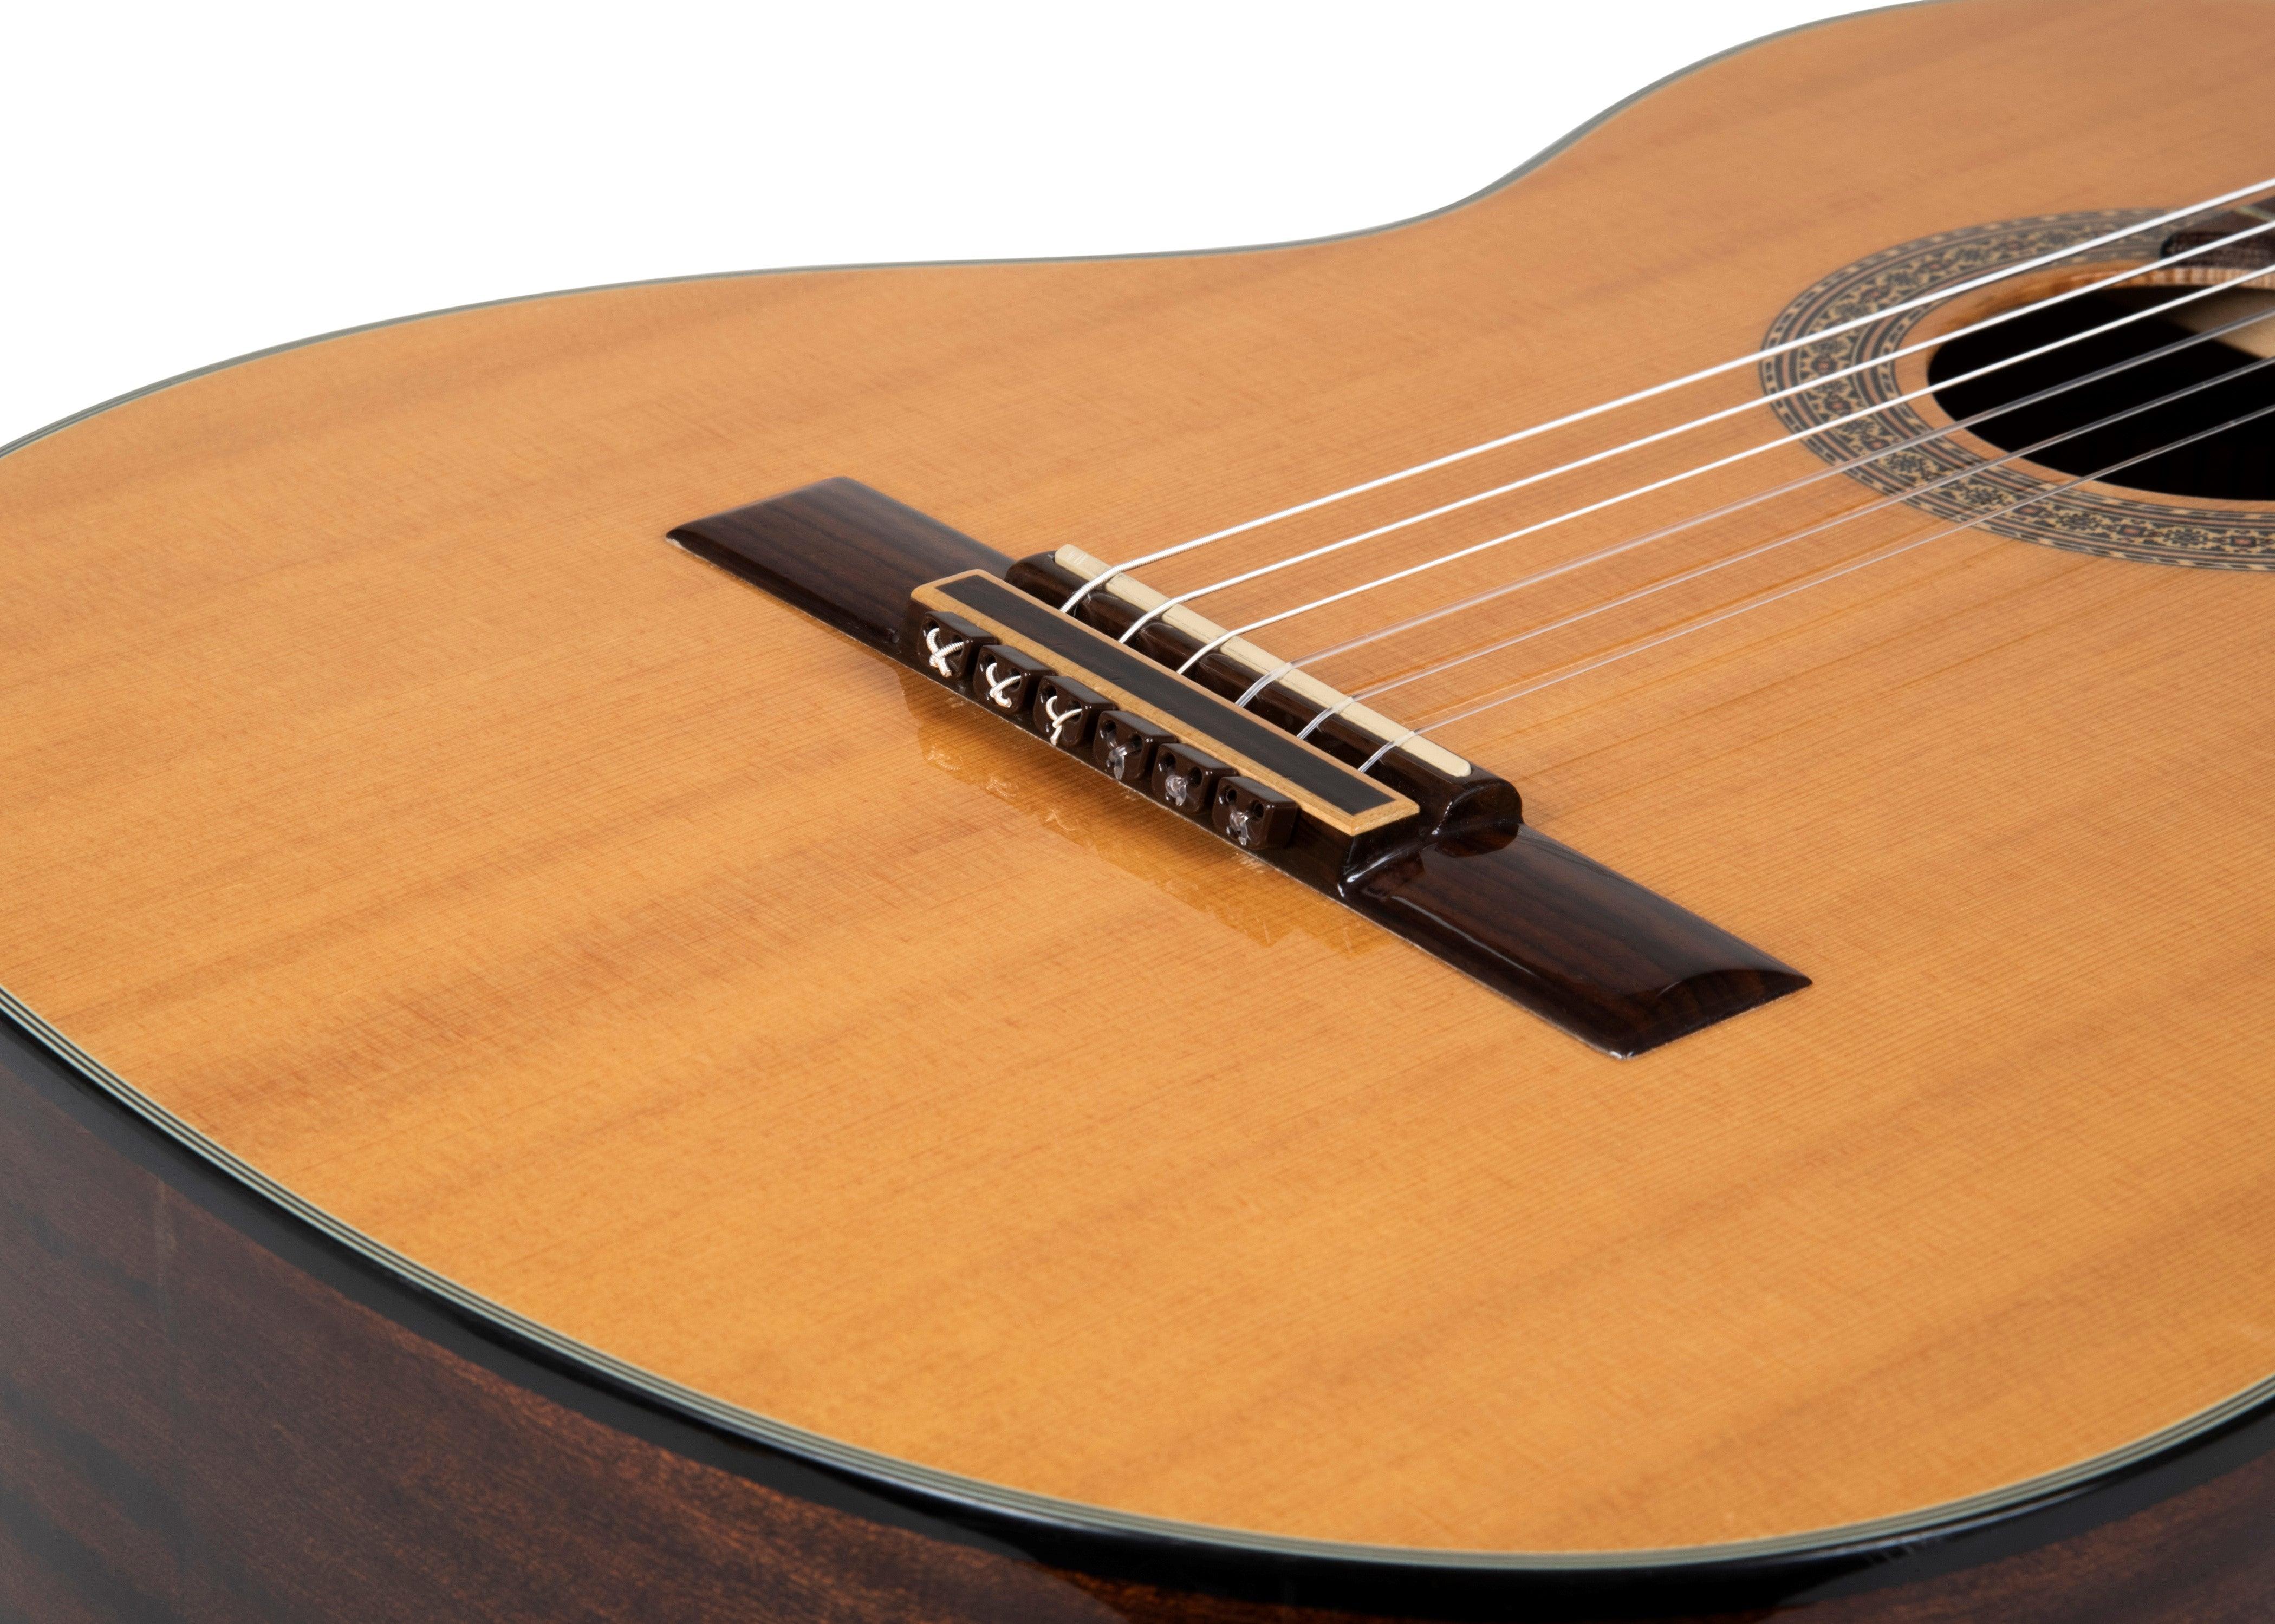 Brown Gloss Classical Flamenco Acoustic Nylon Guitar Bridge Beads String Tie Blocks - mackazie